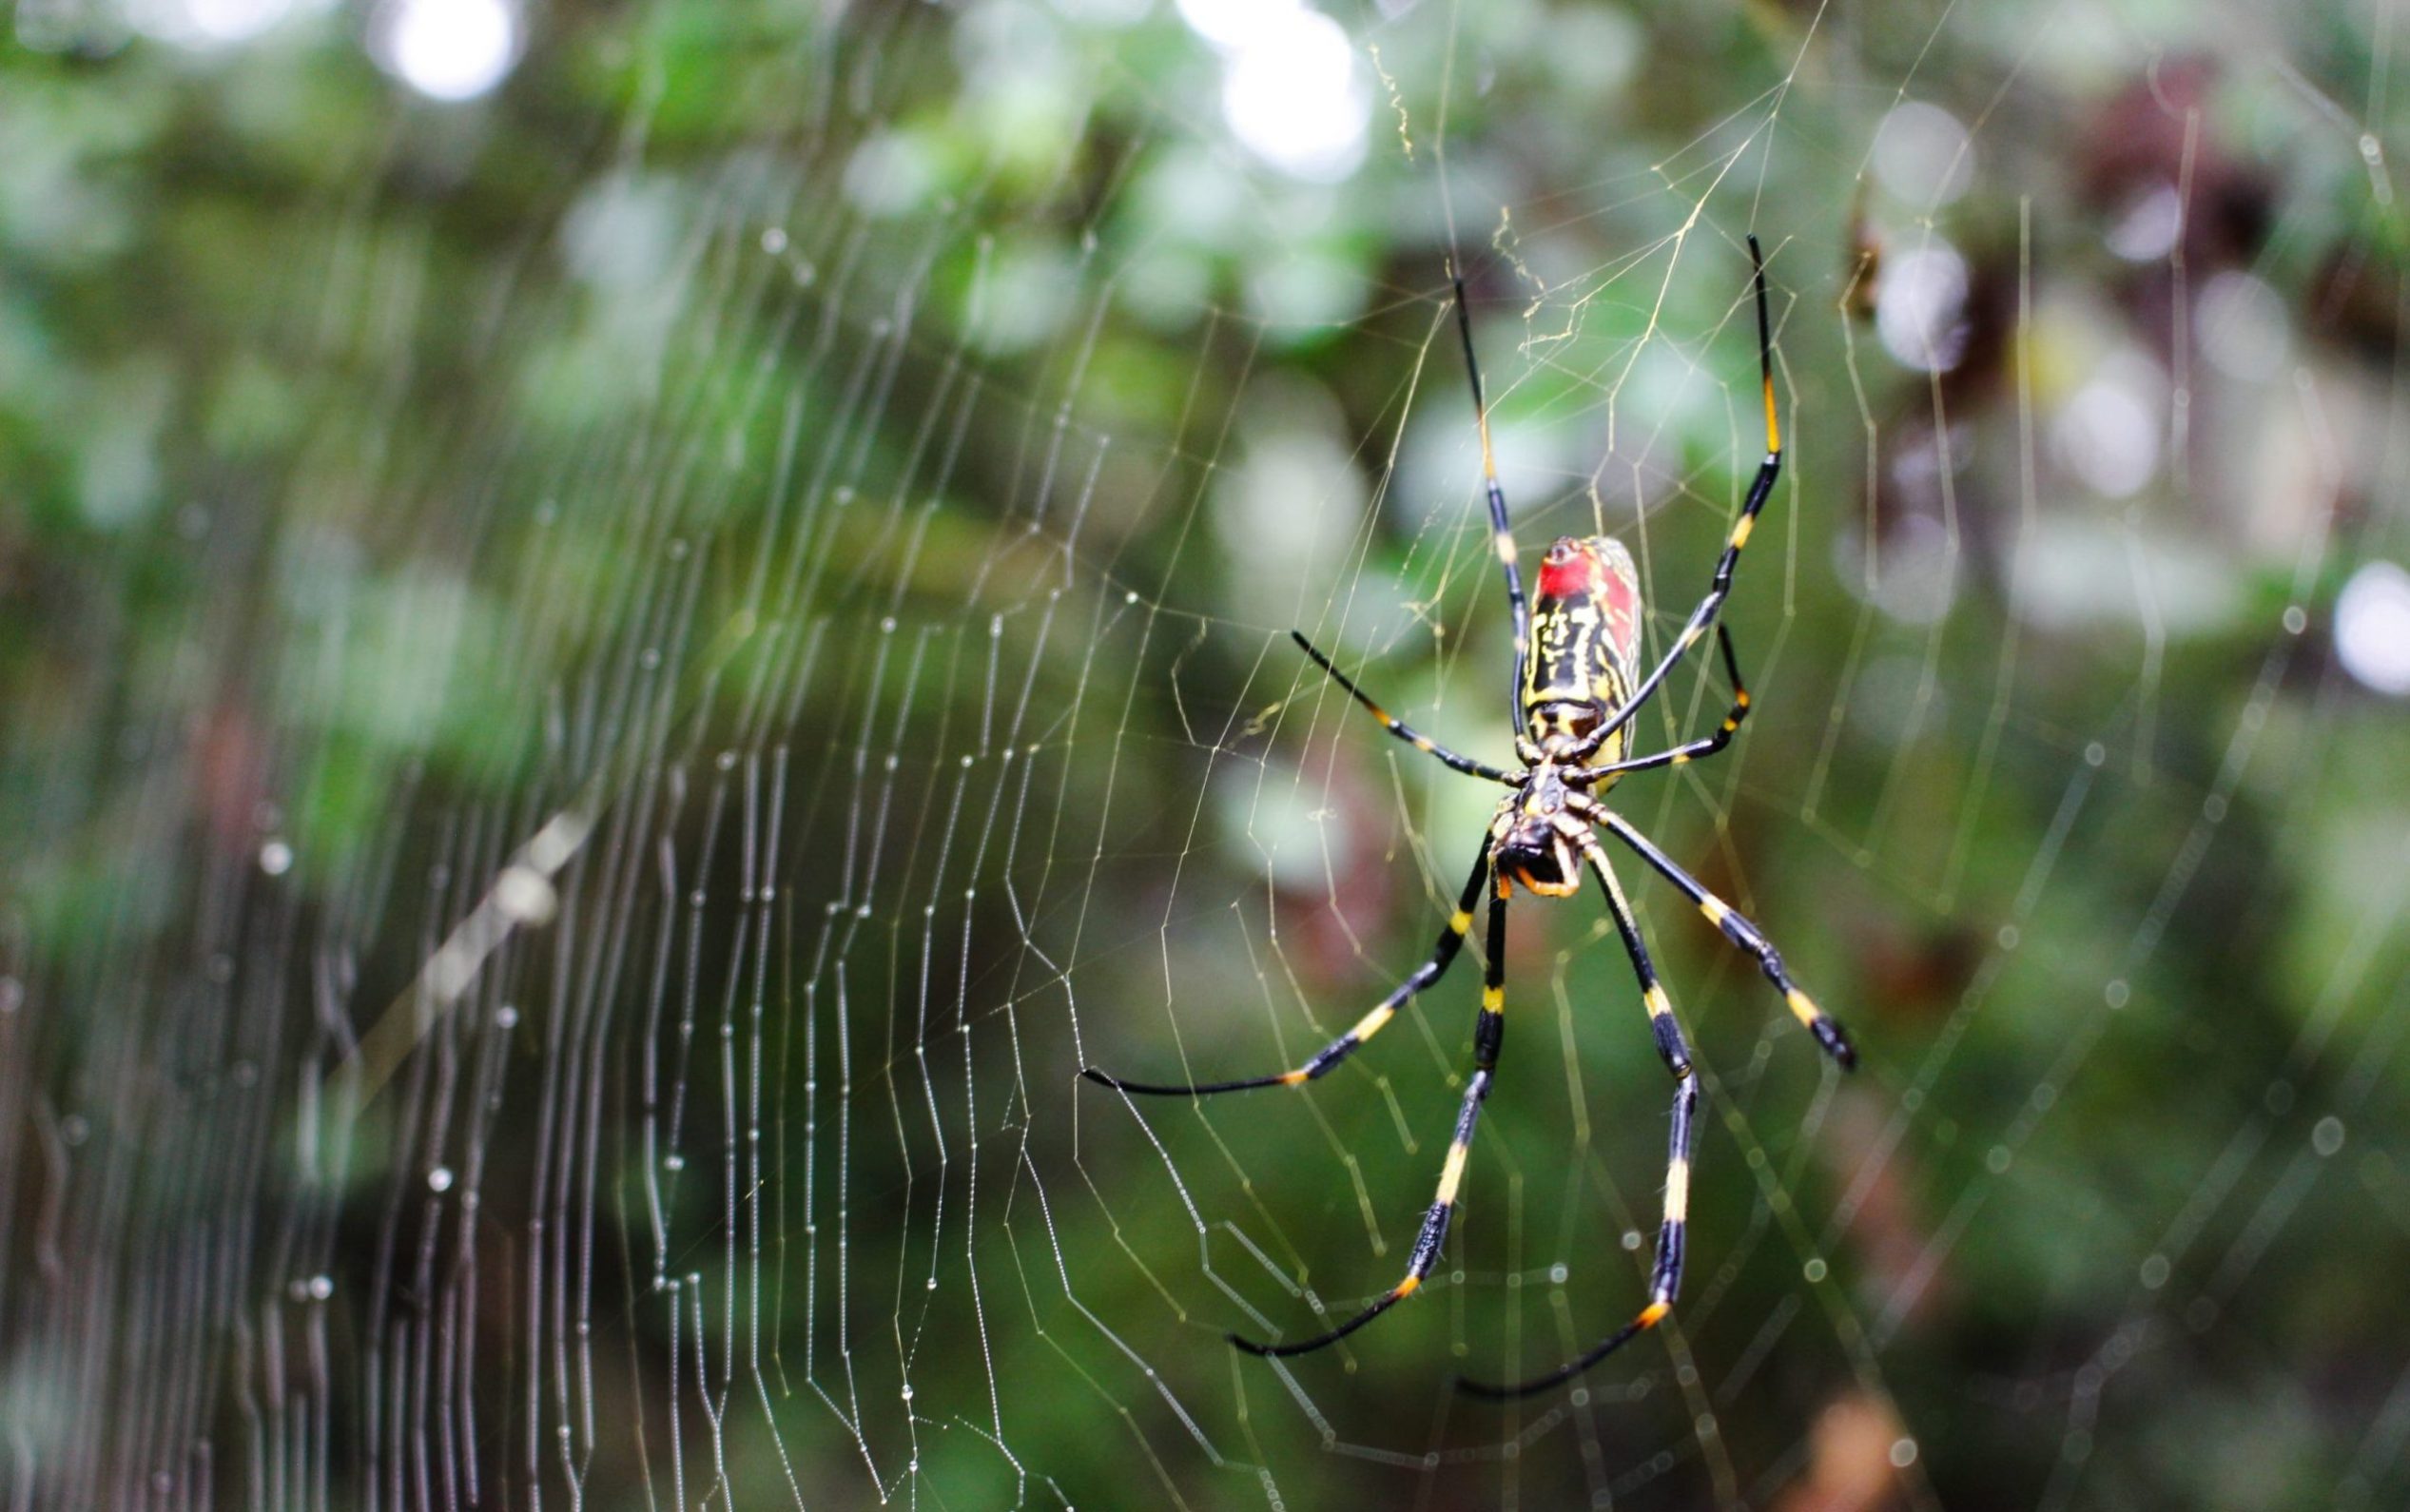 female Joro spider in web, ventral view